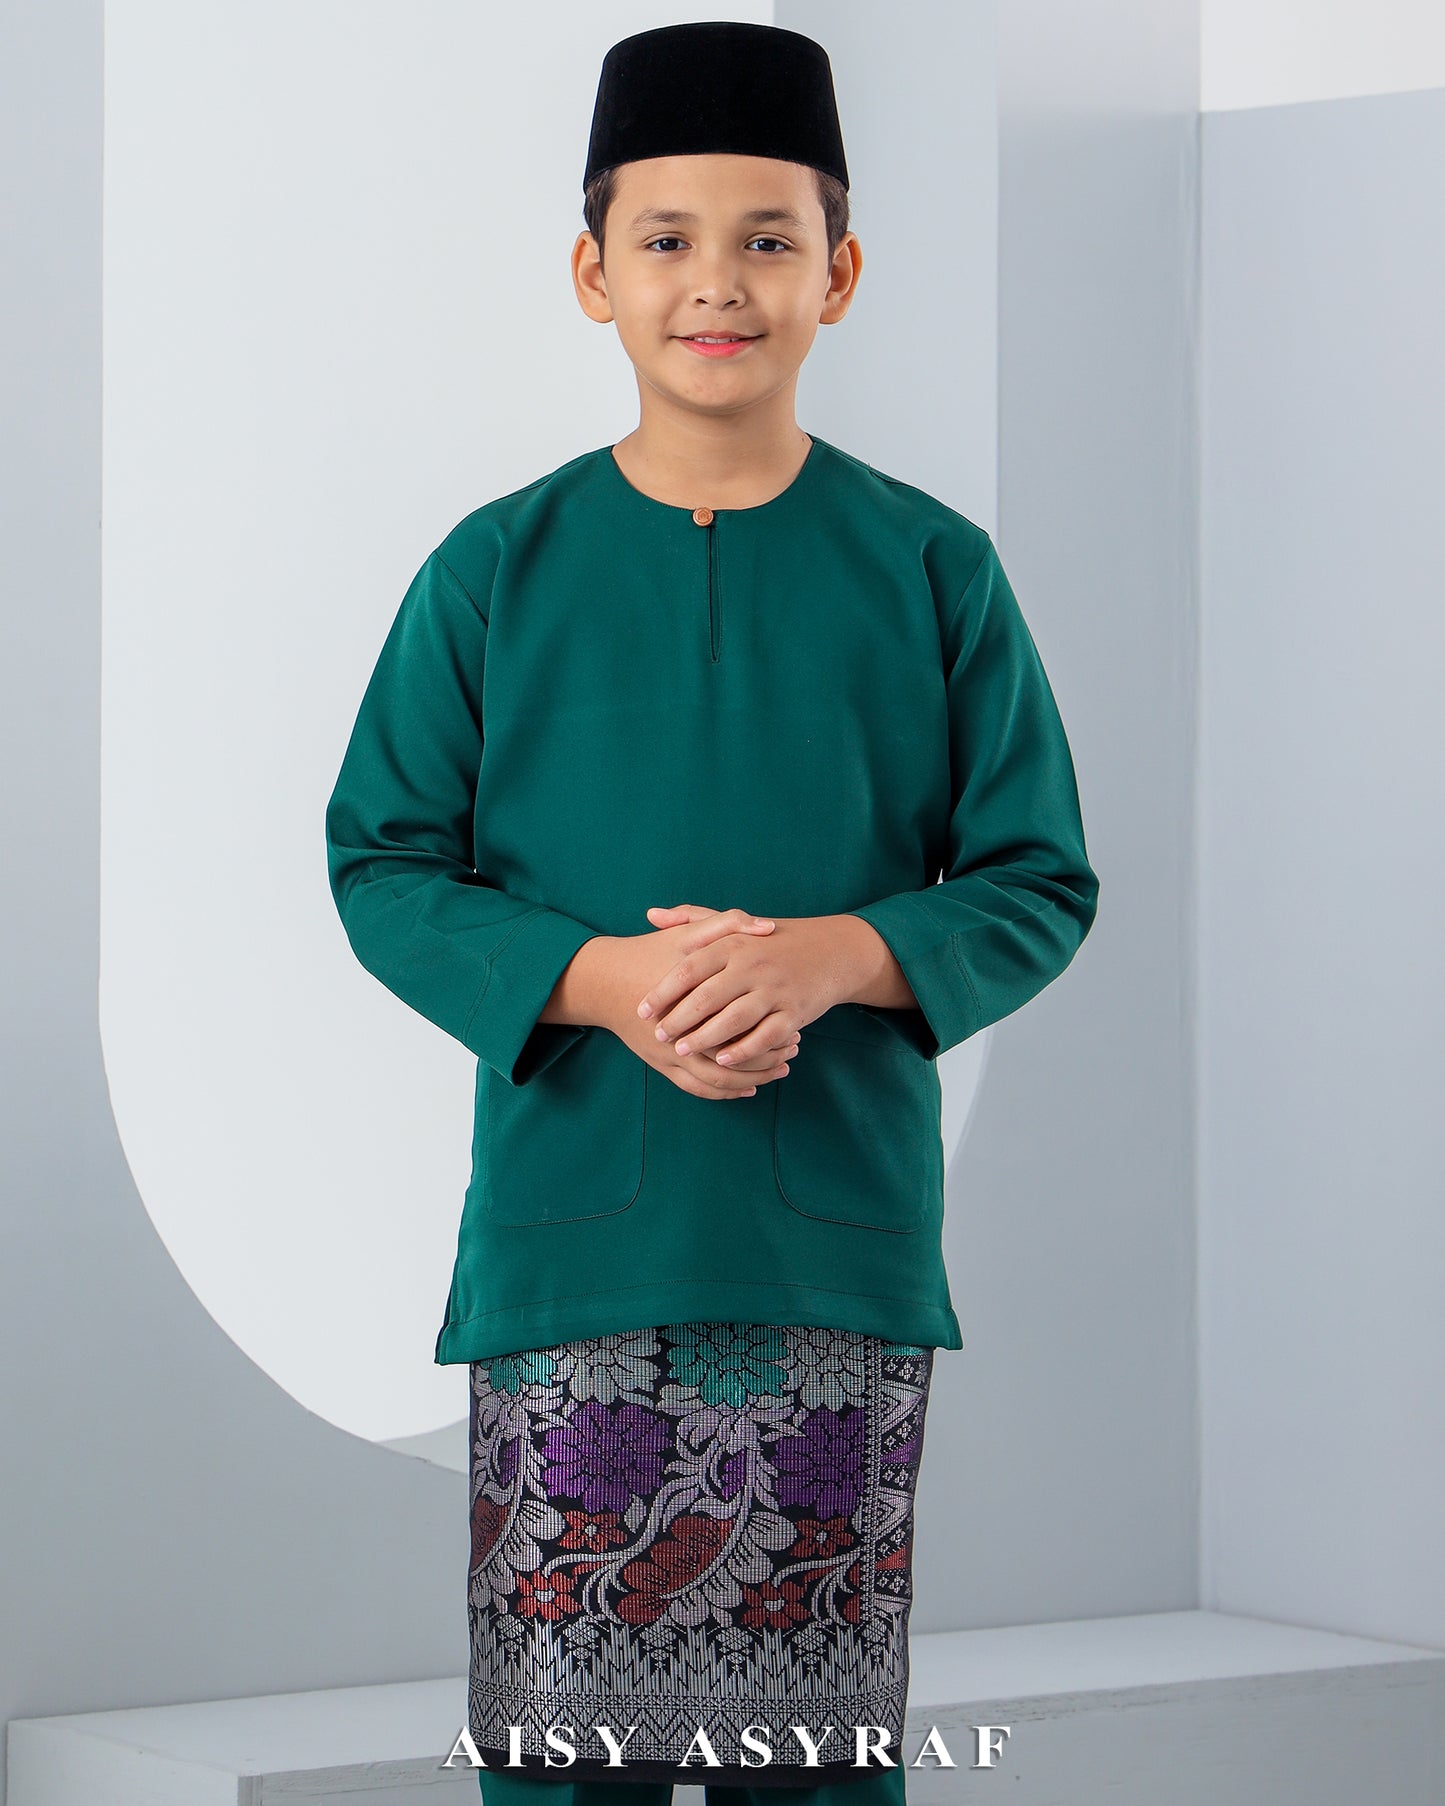 Baju Melayu Antalya Kids - Emerald Green